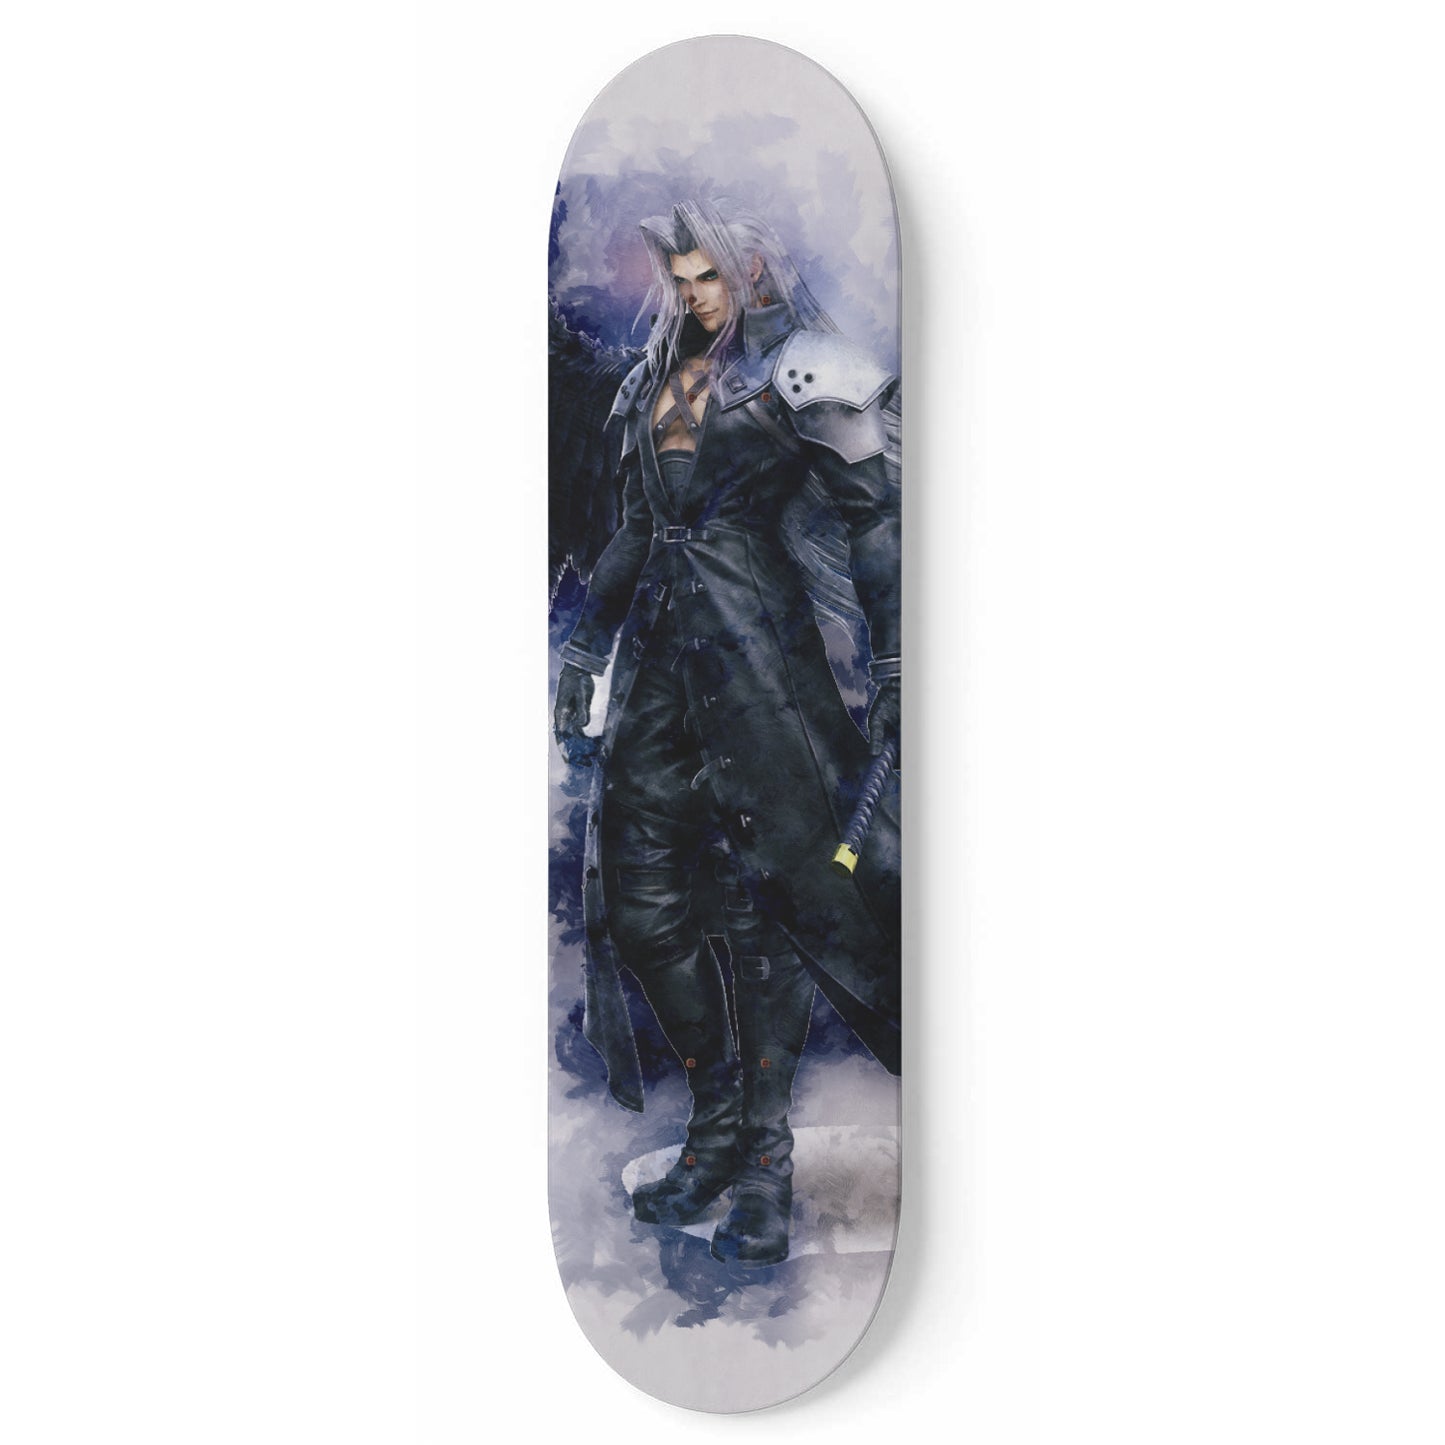 Final Fantasy 7 - Sephiroth Painting, Skateboard Wall Art